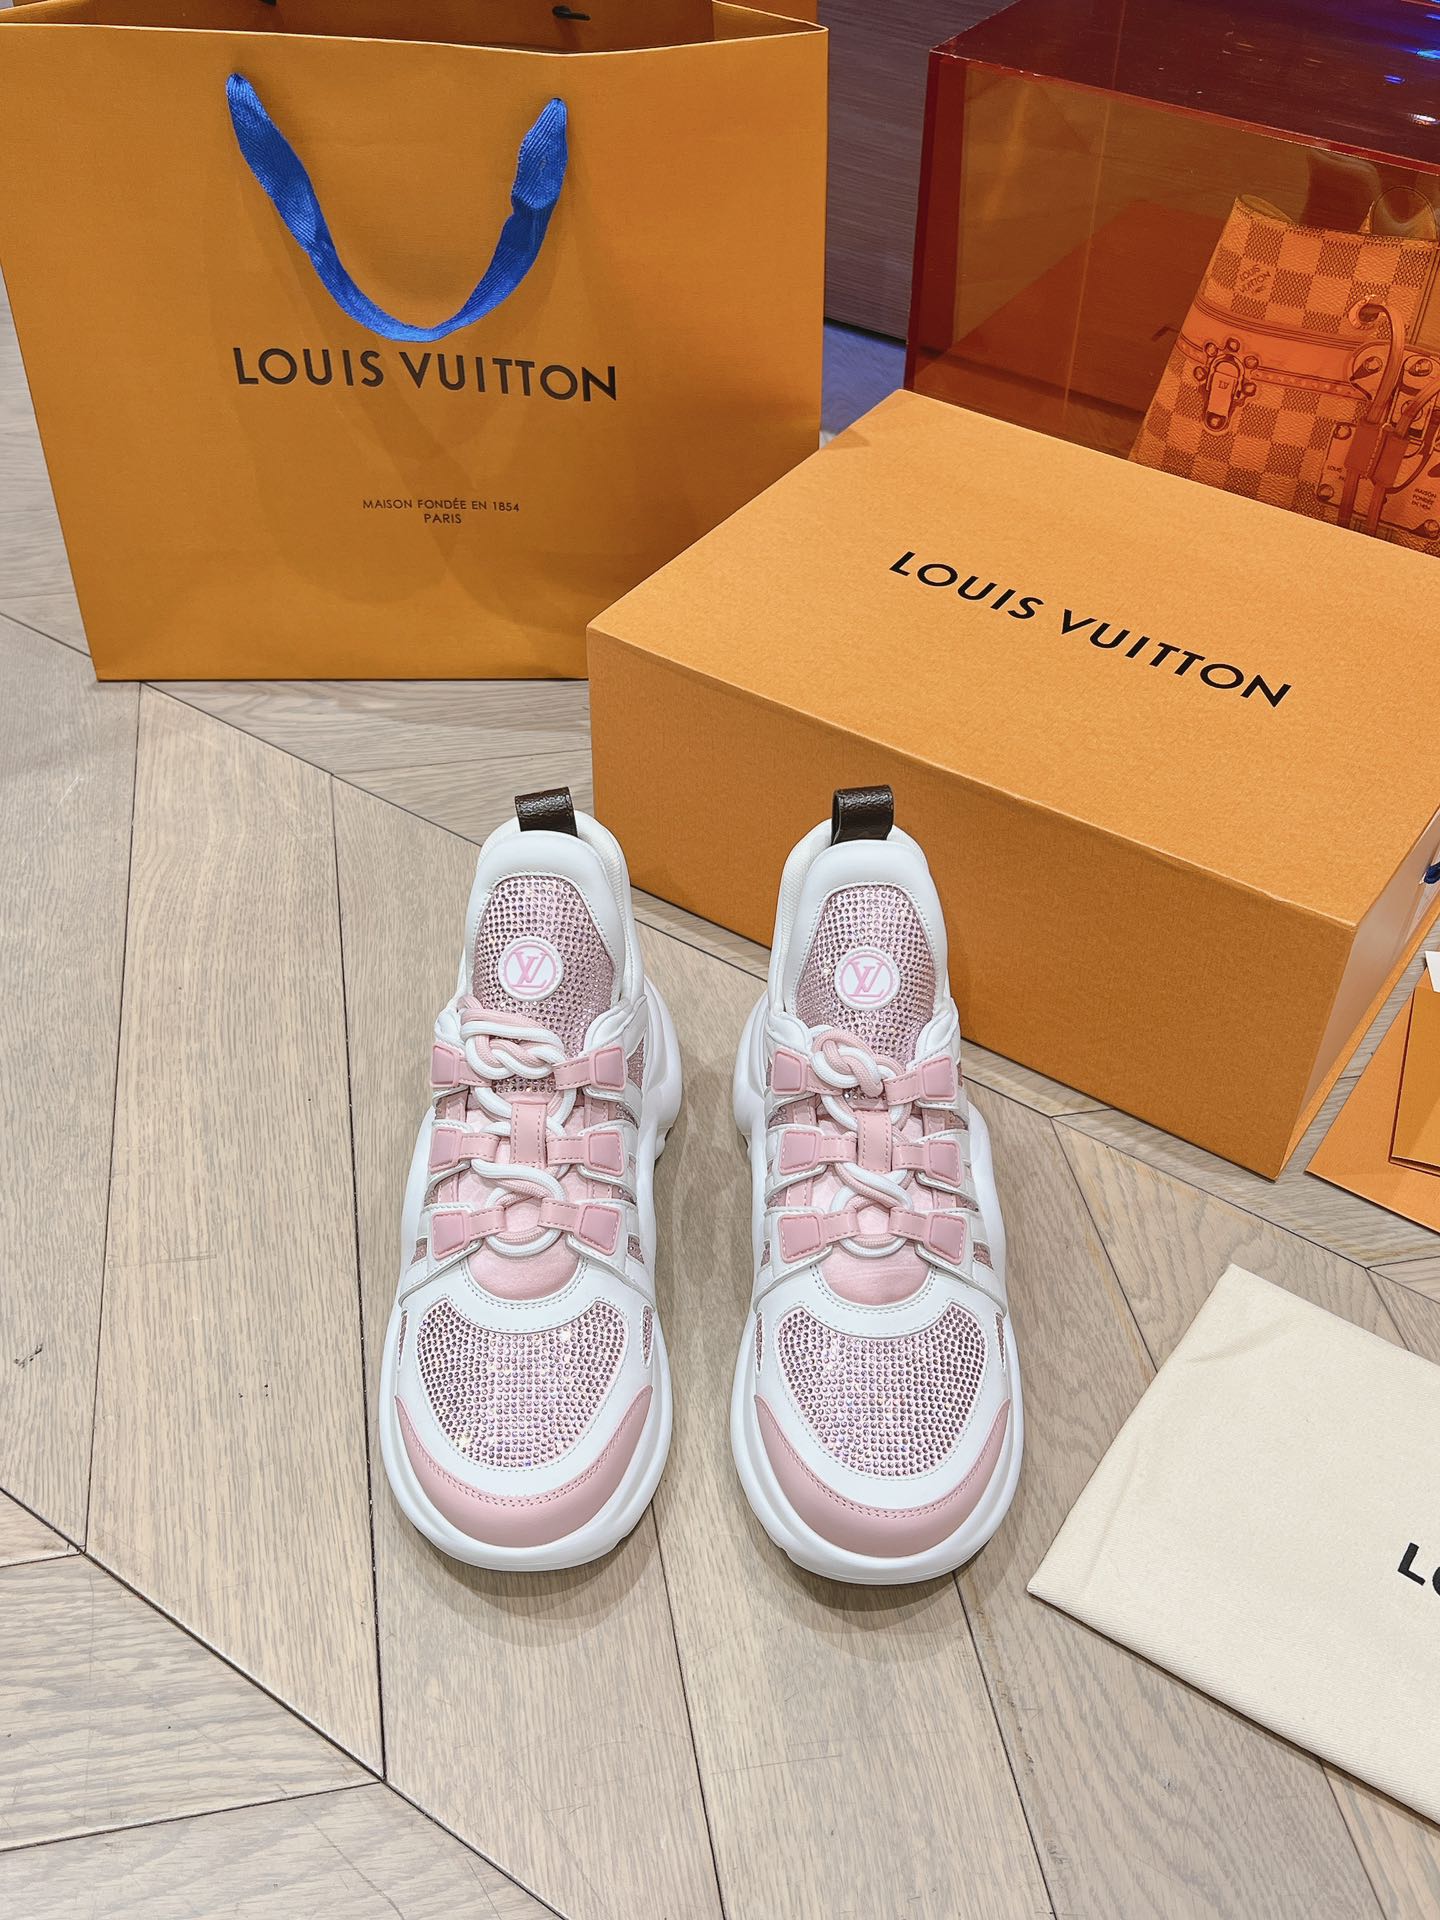 Louis Vuitton Schoenen Sportschoenen Vrouwen Zomercollectie